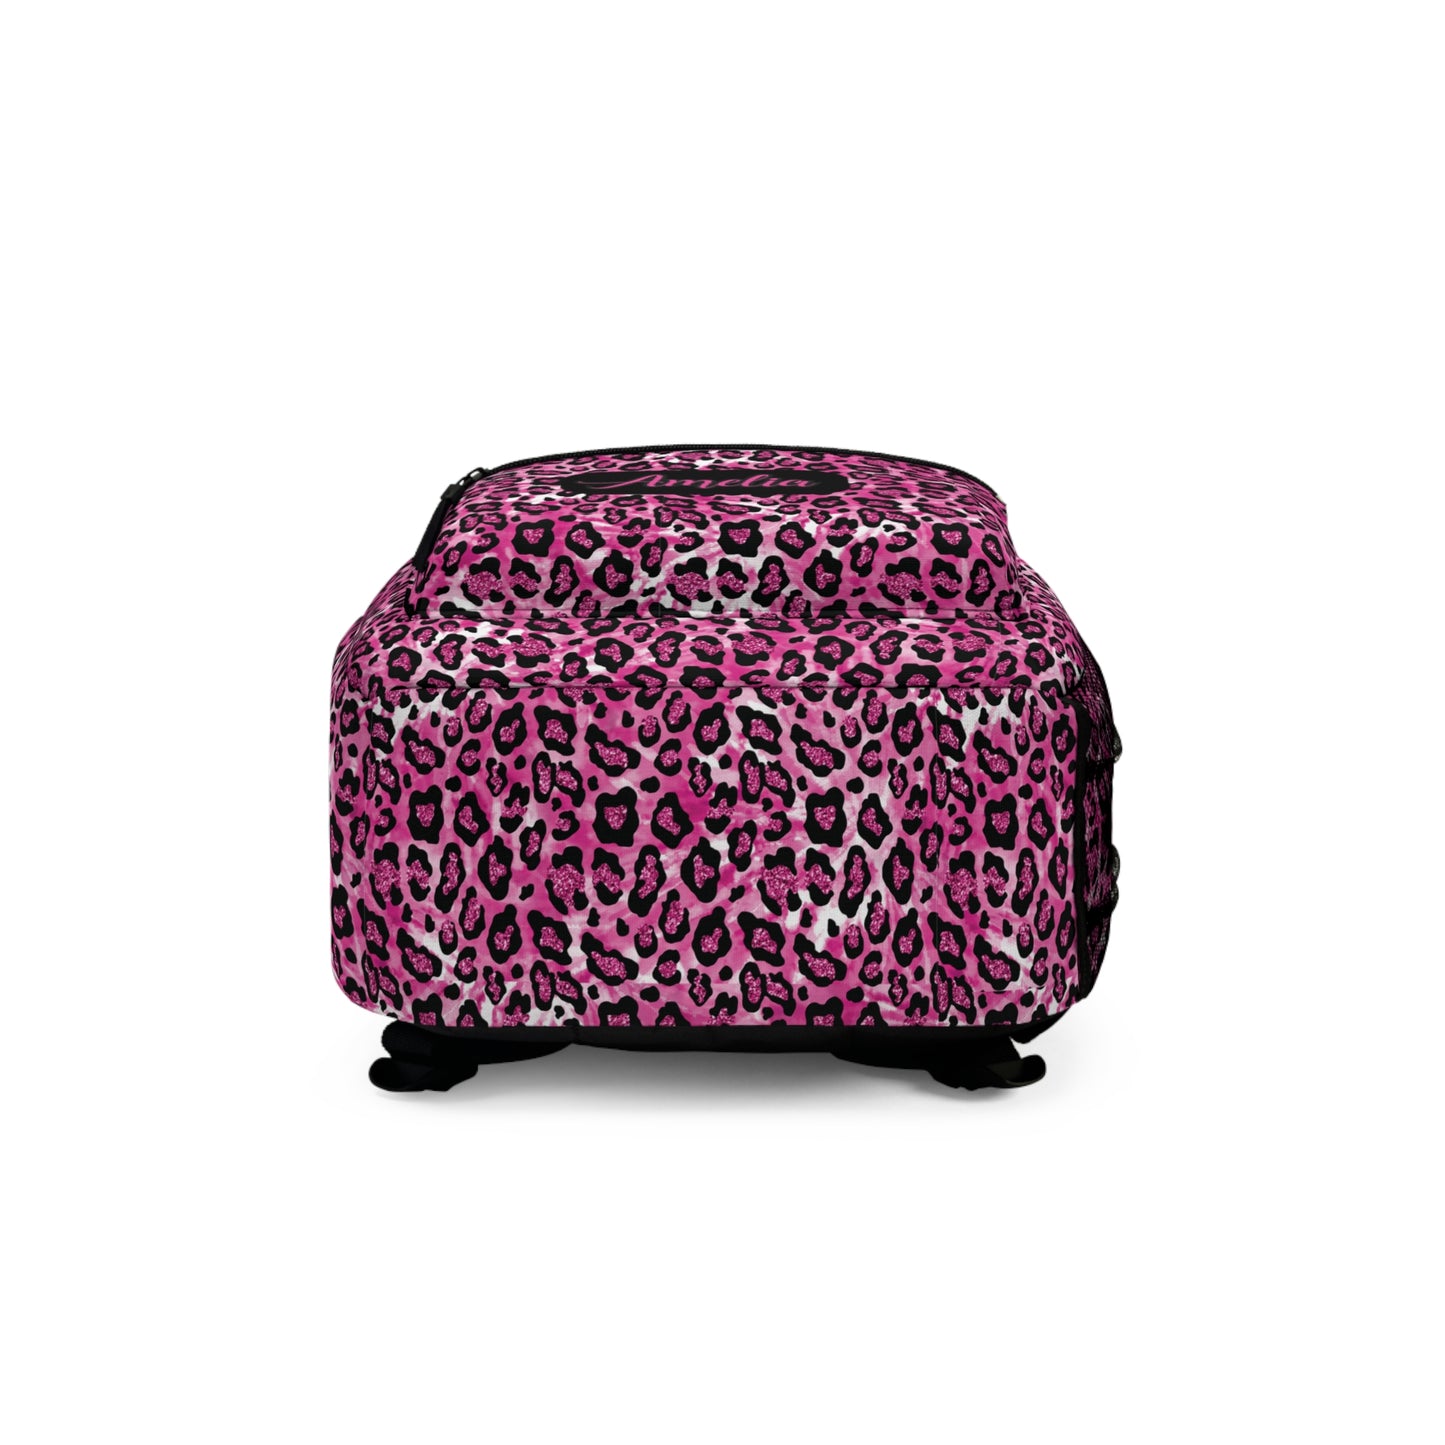 Pink Leopard Print Backpack / Personalized Bookbag